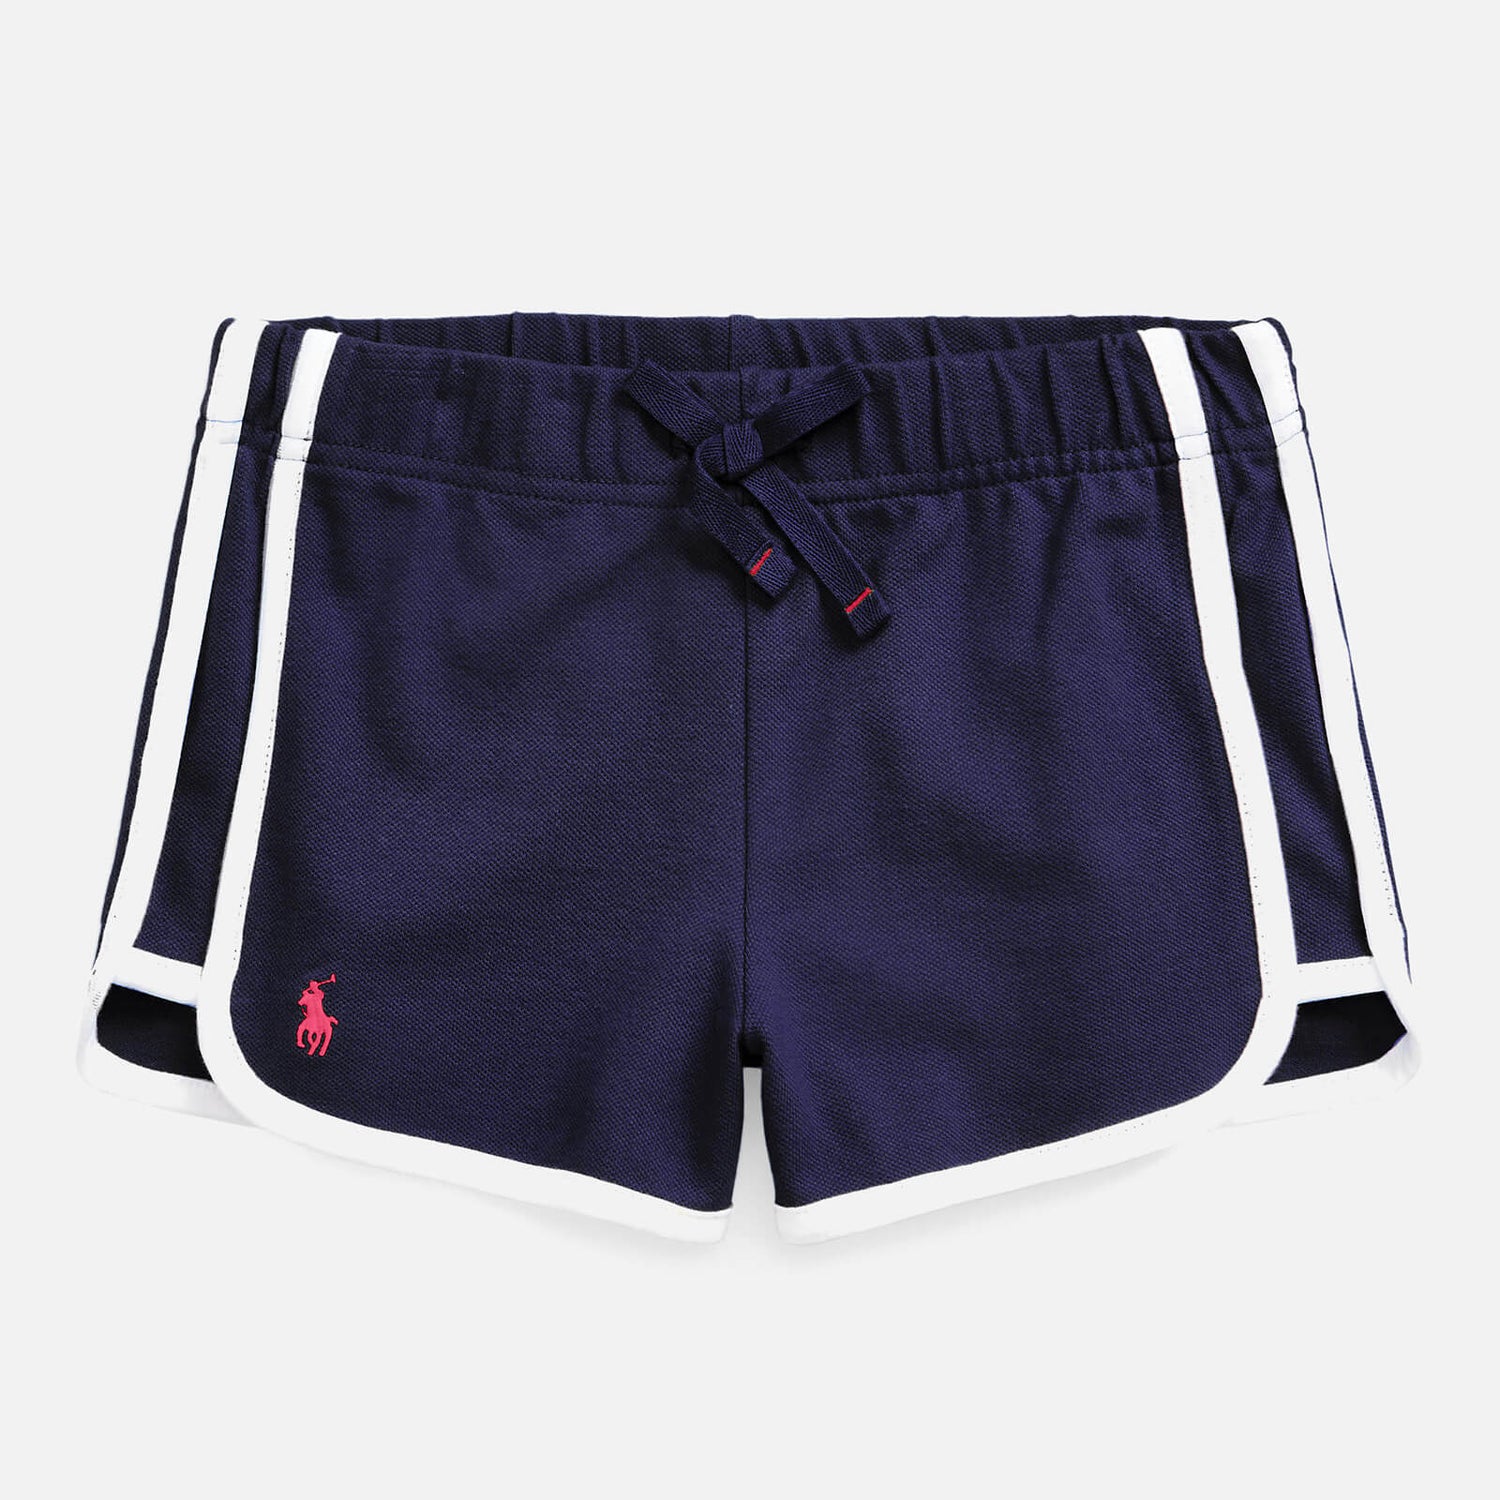 Polo Ralph Lauren Girls' Side Stripe Shorts - Navy - 2 Years